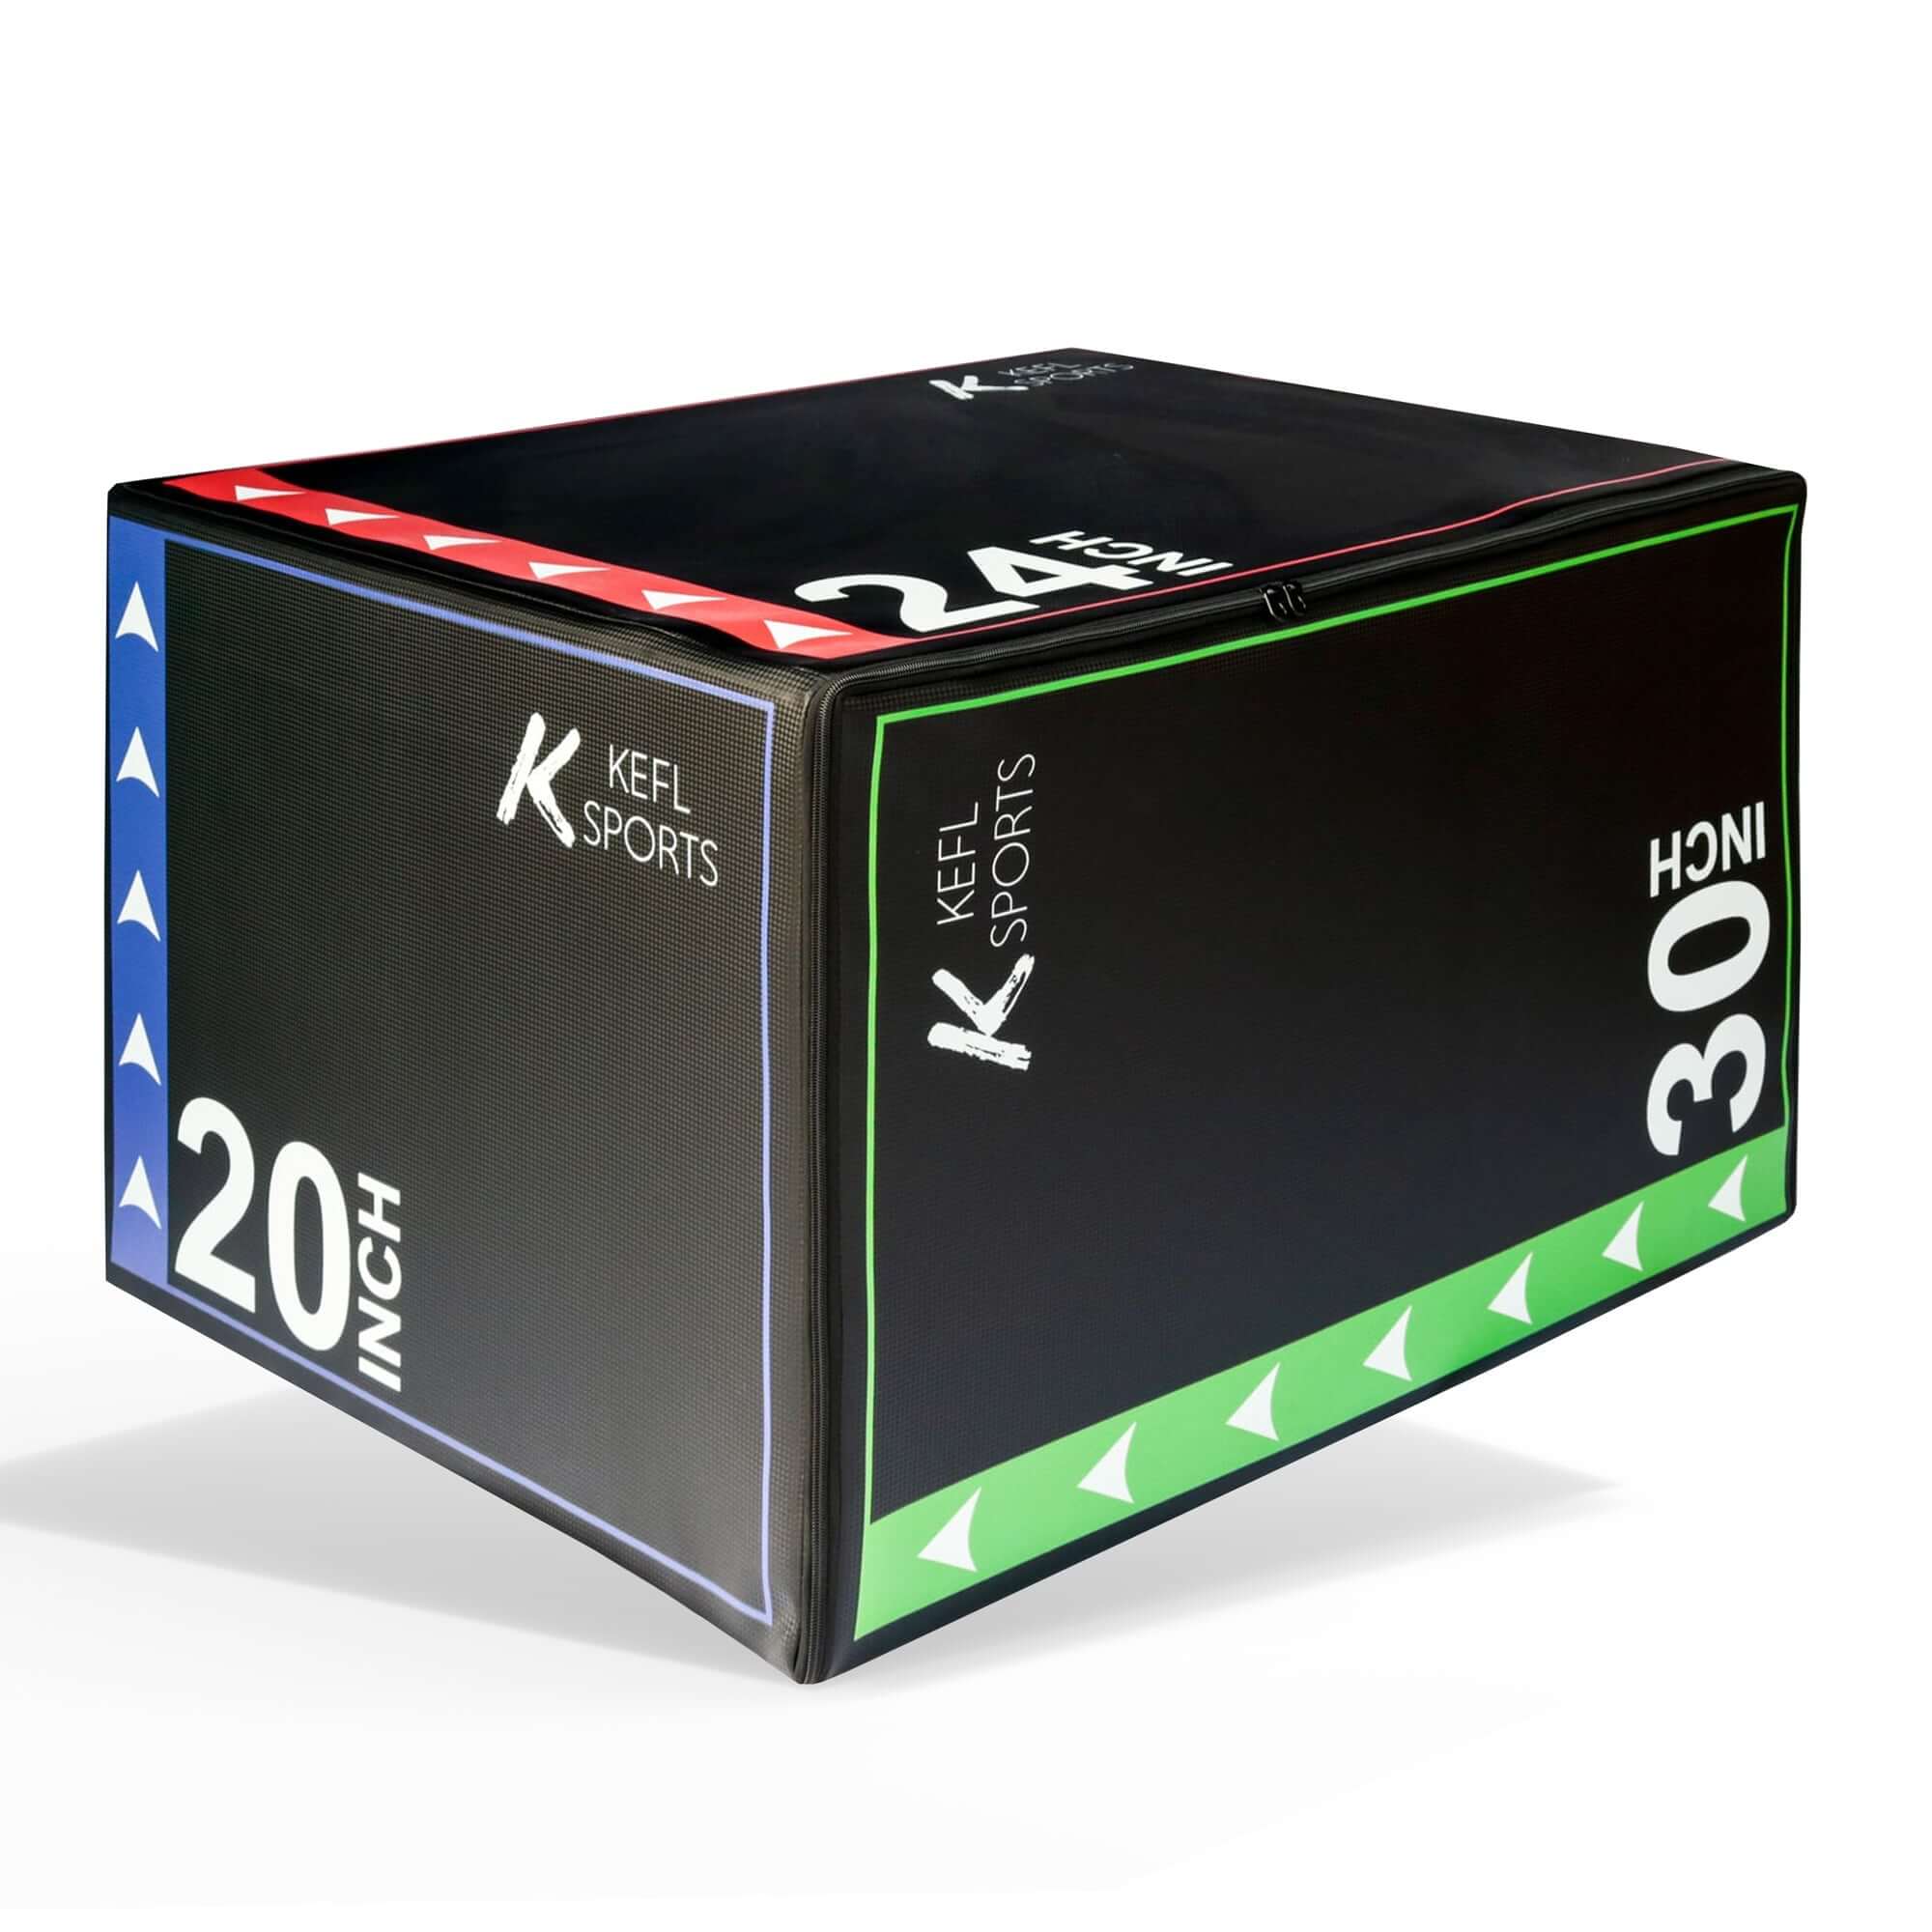 KEFL 3 in 1 Soft Plyo Jump Box - 30" X 24" X 20" - KEFLUK